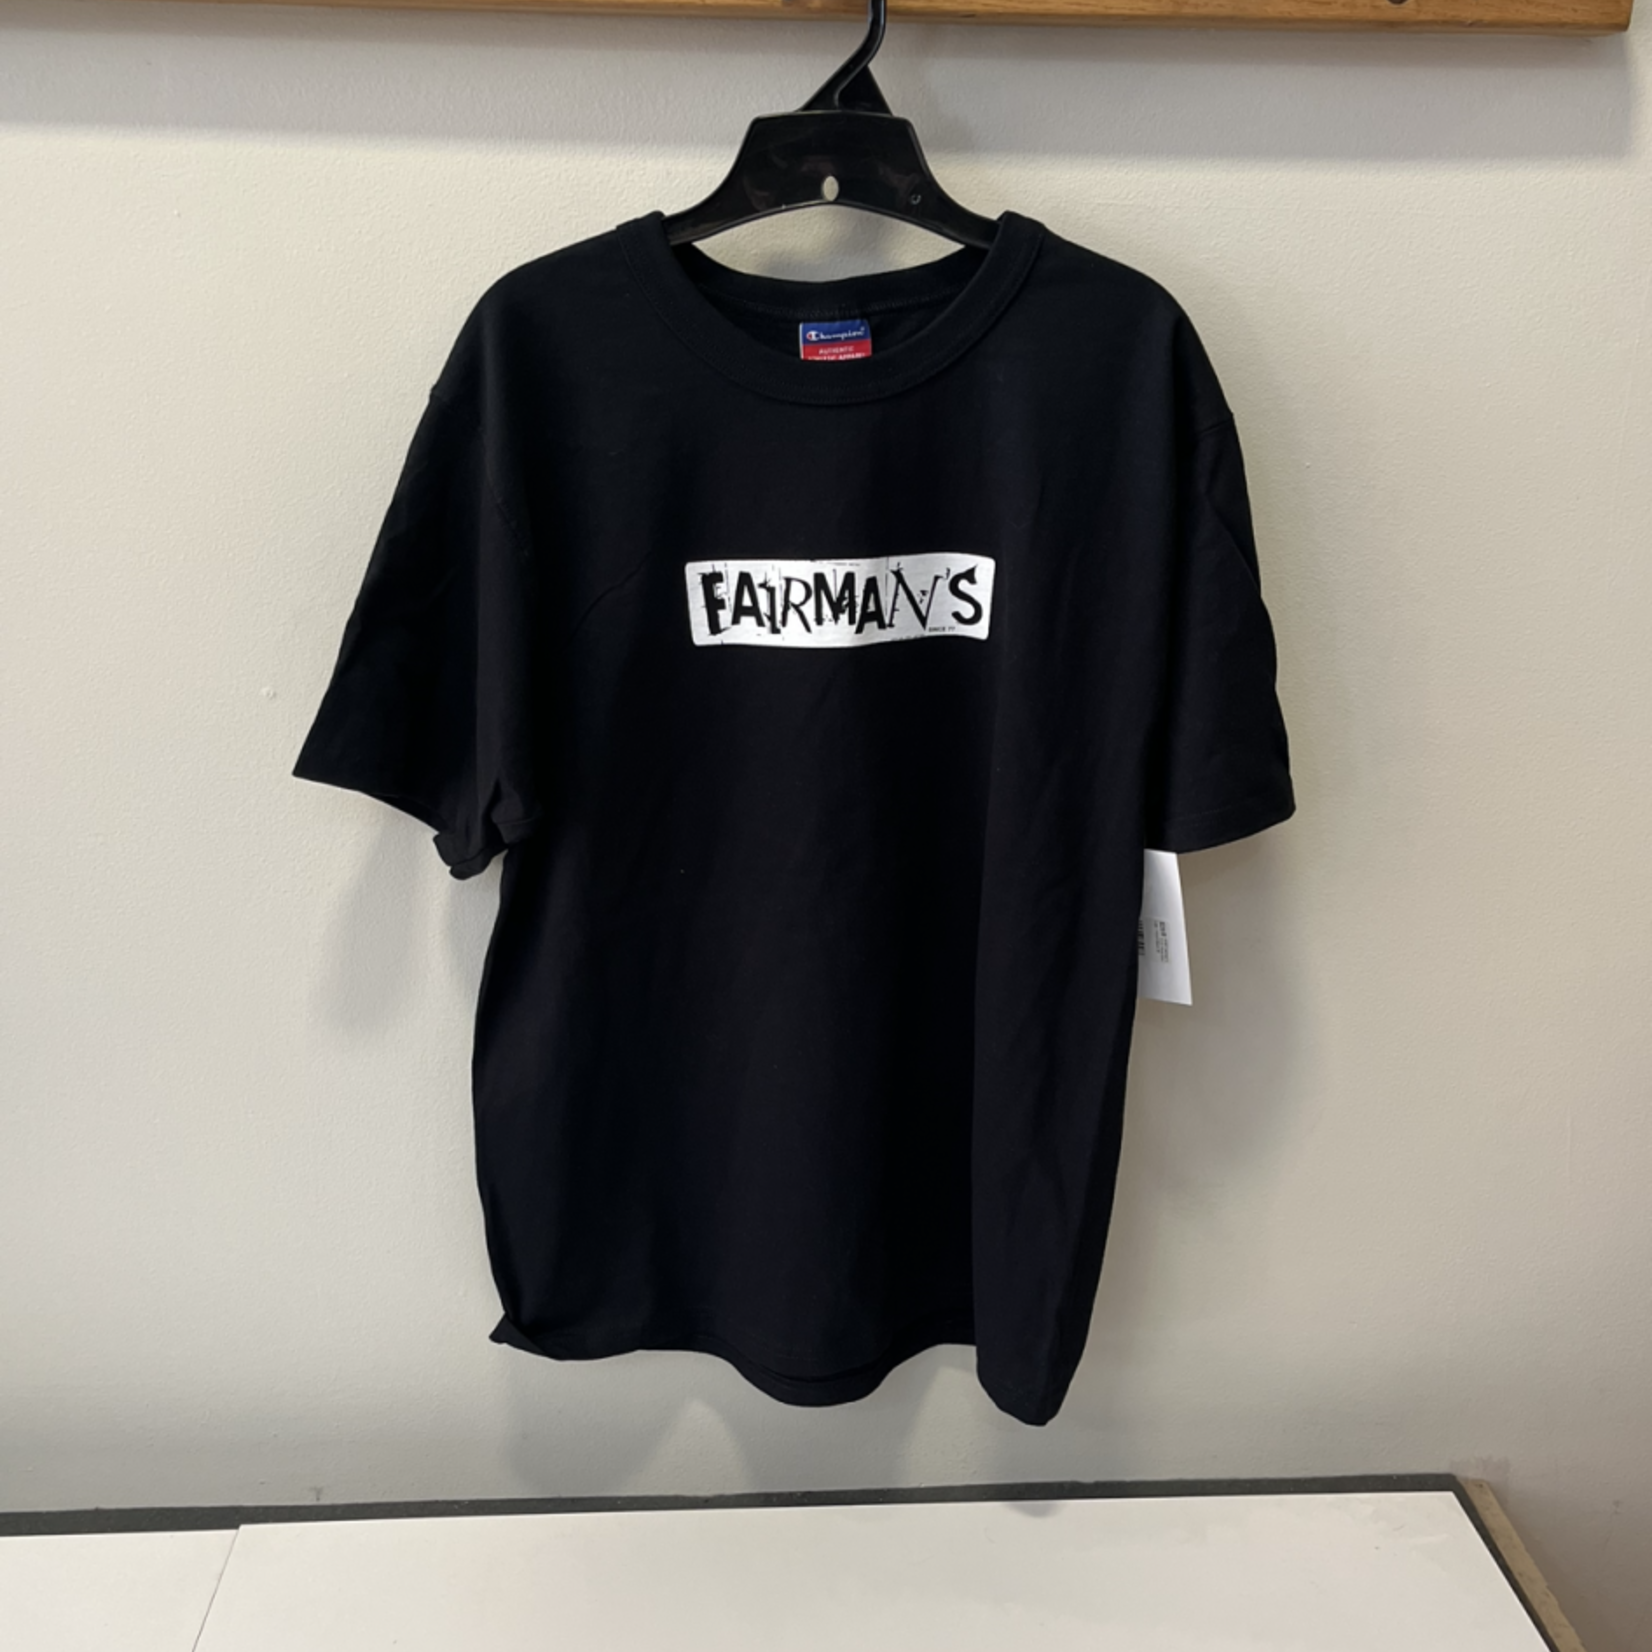 Fairman's Fairman's Punk Rock Box Logo T-Shirt